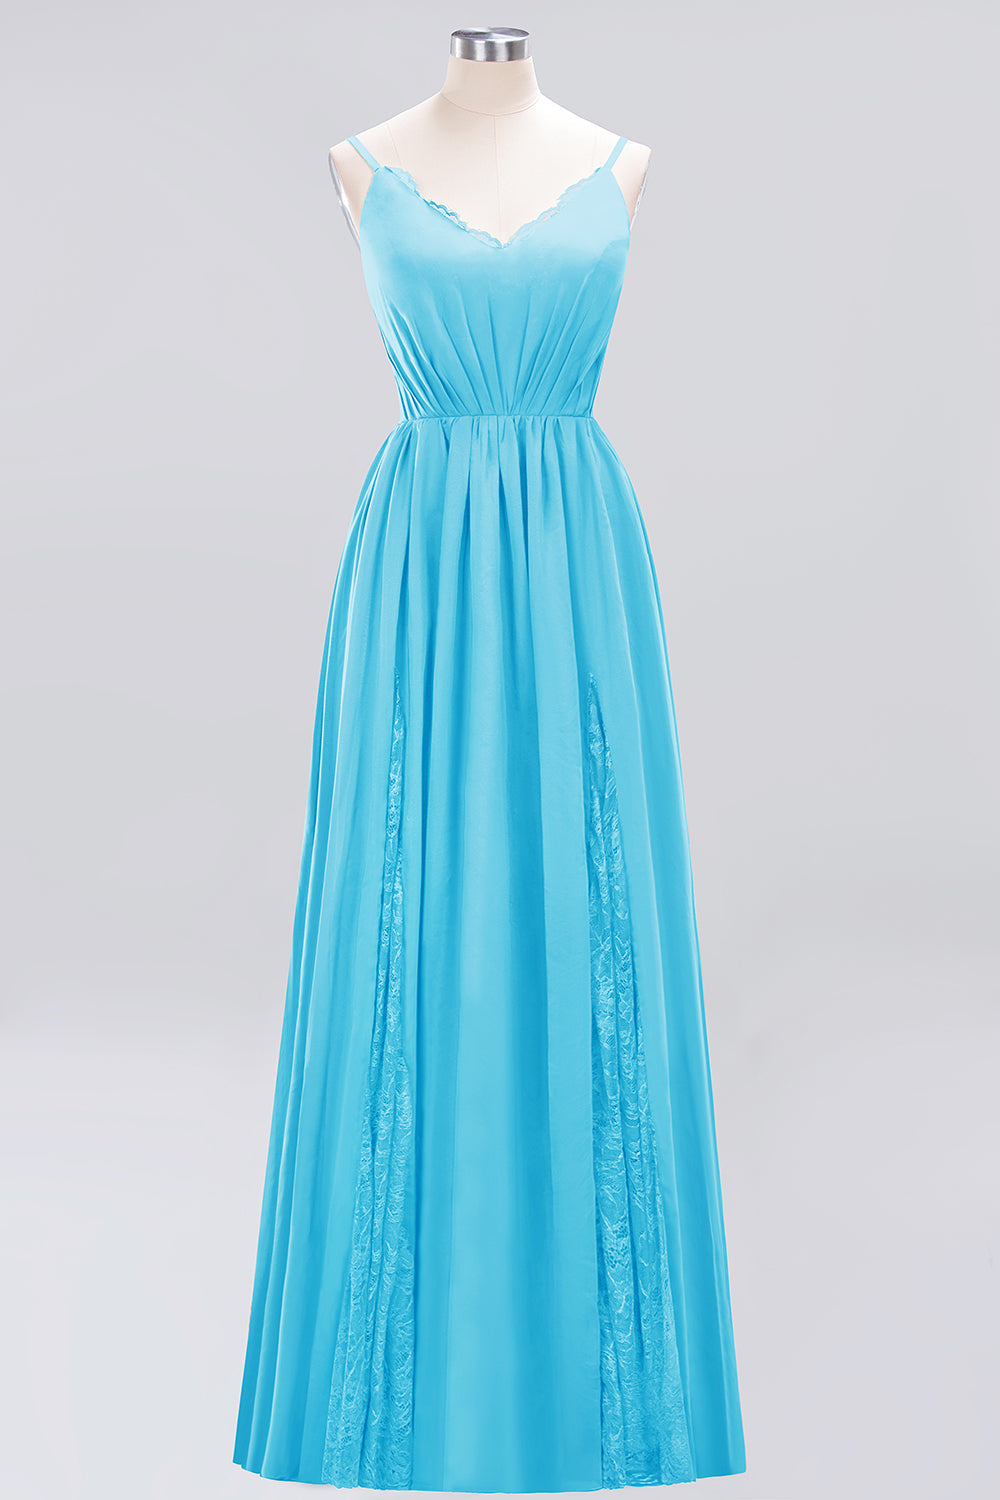 Elegant Spaghetti Straps Long Bridesmaid Dress Lace V-Neck Maid of Honor Dress-27dress